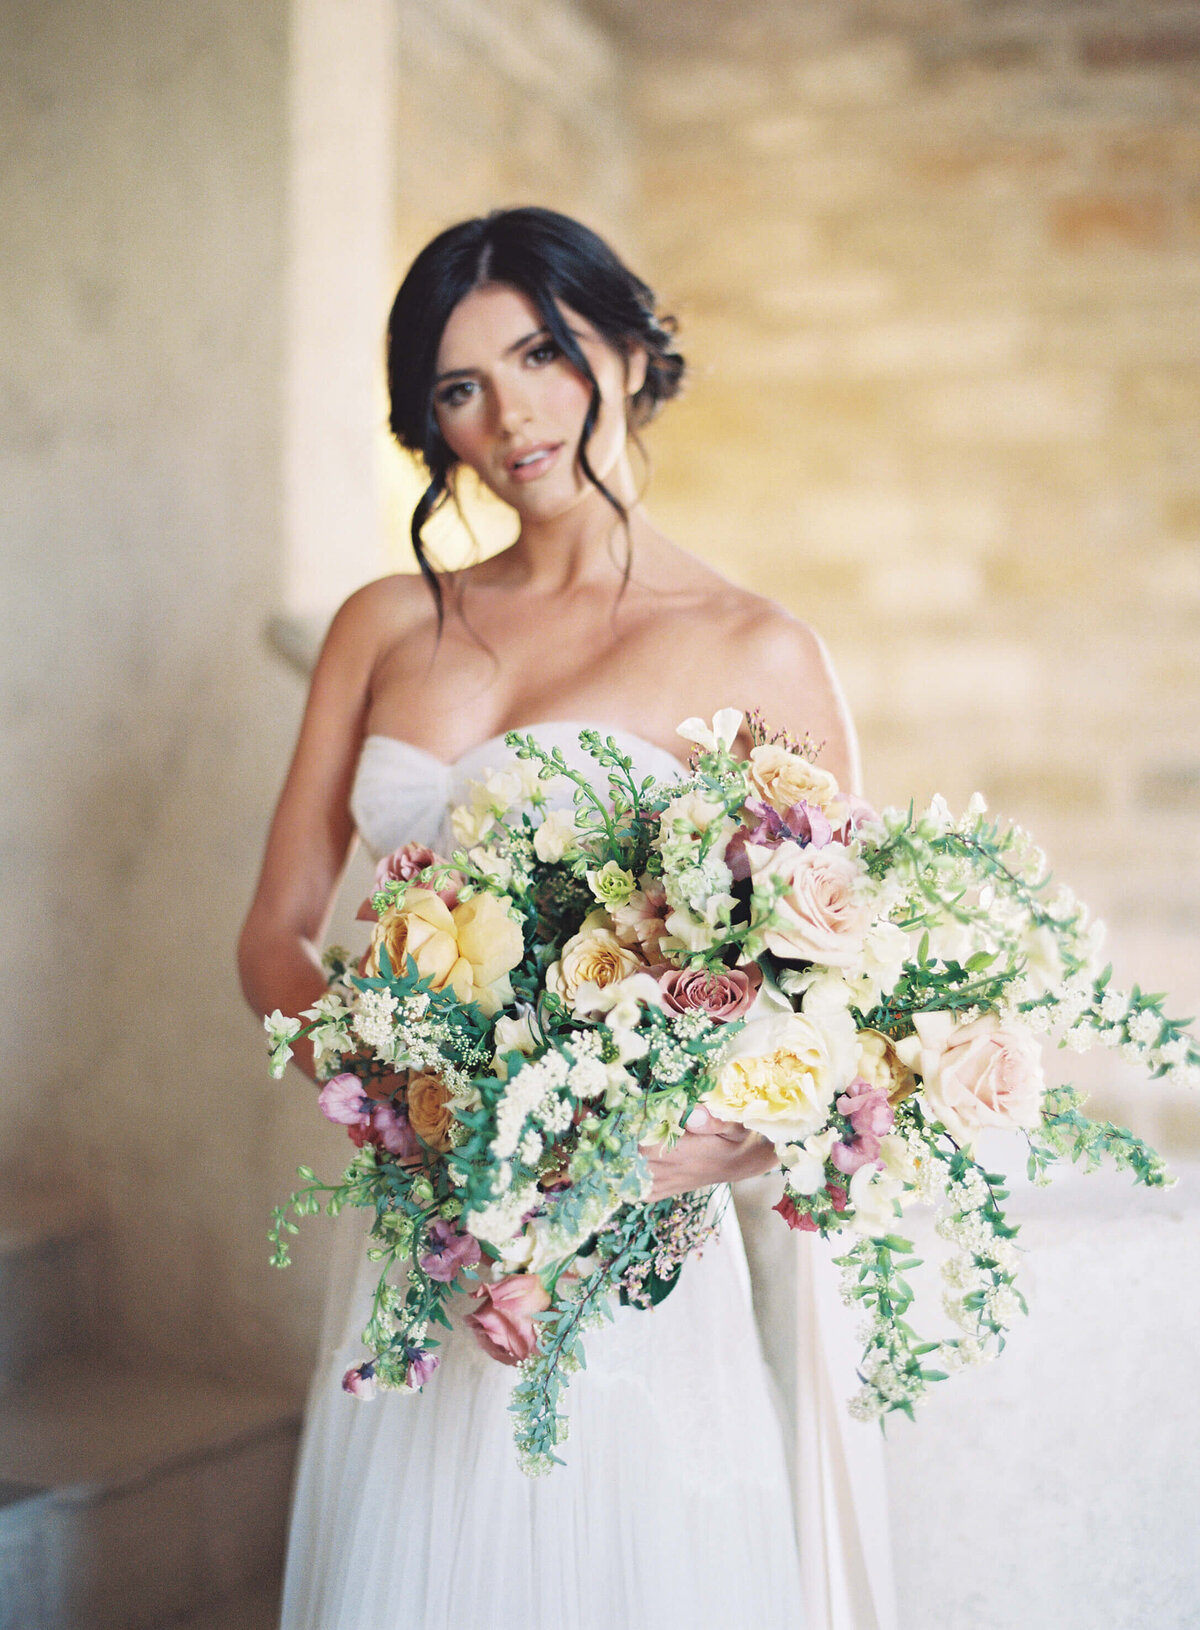 Sunstone-Winery- Destination Wedding Florist - Luxury Wedding Flowers - Autumn Marcelle Design (194)